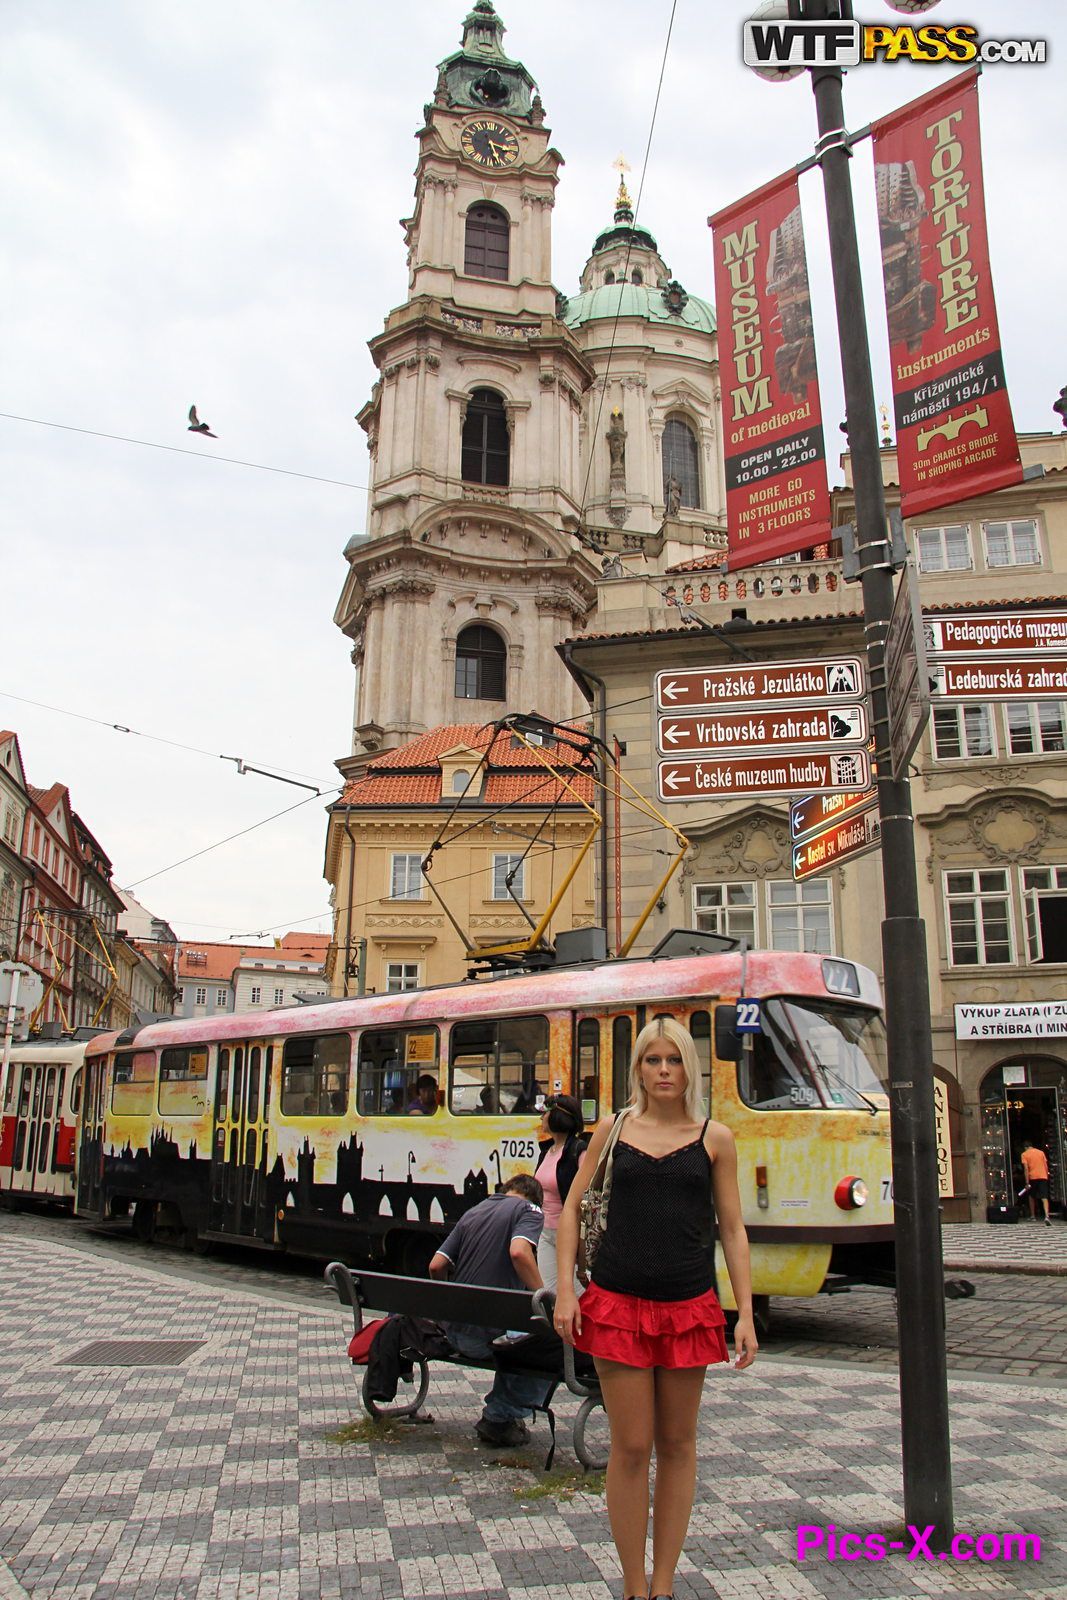 Private tour on Prague with wild sex - Public Sex Adventures - Image 1